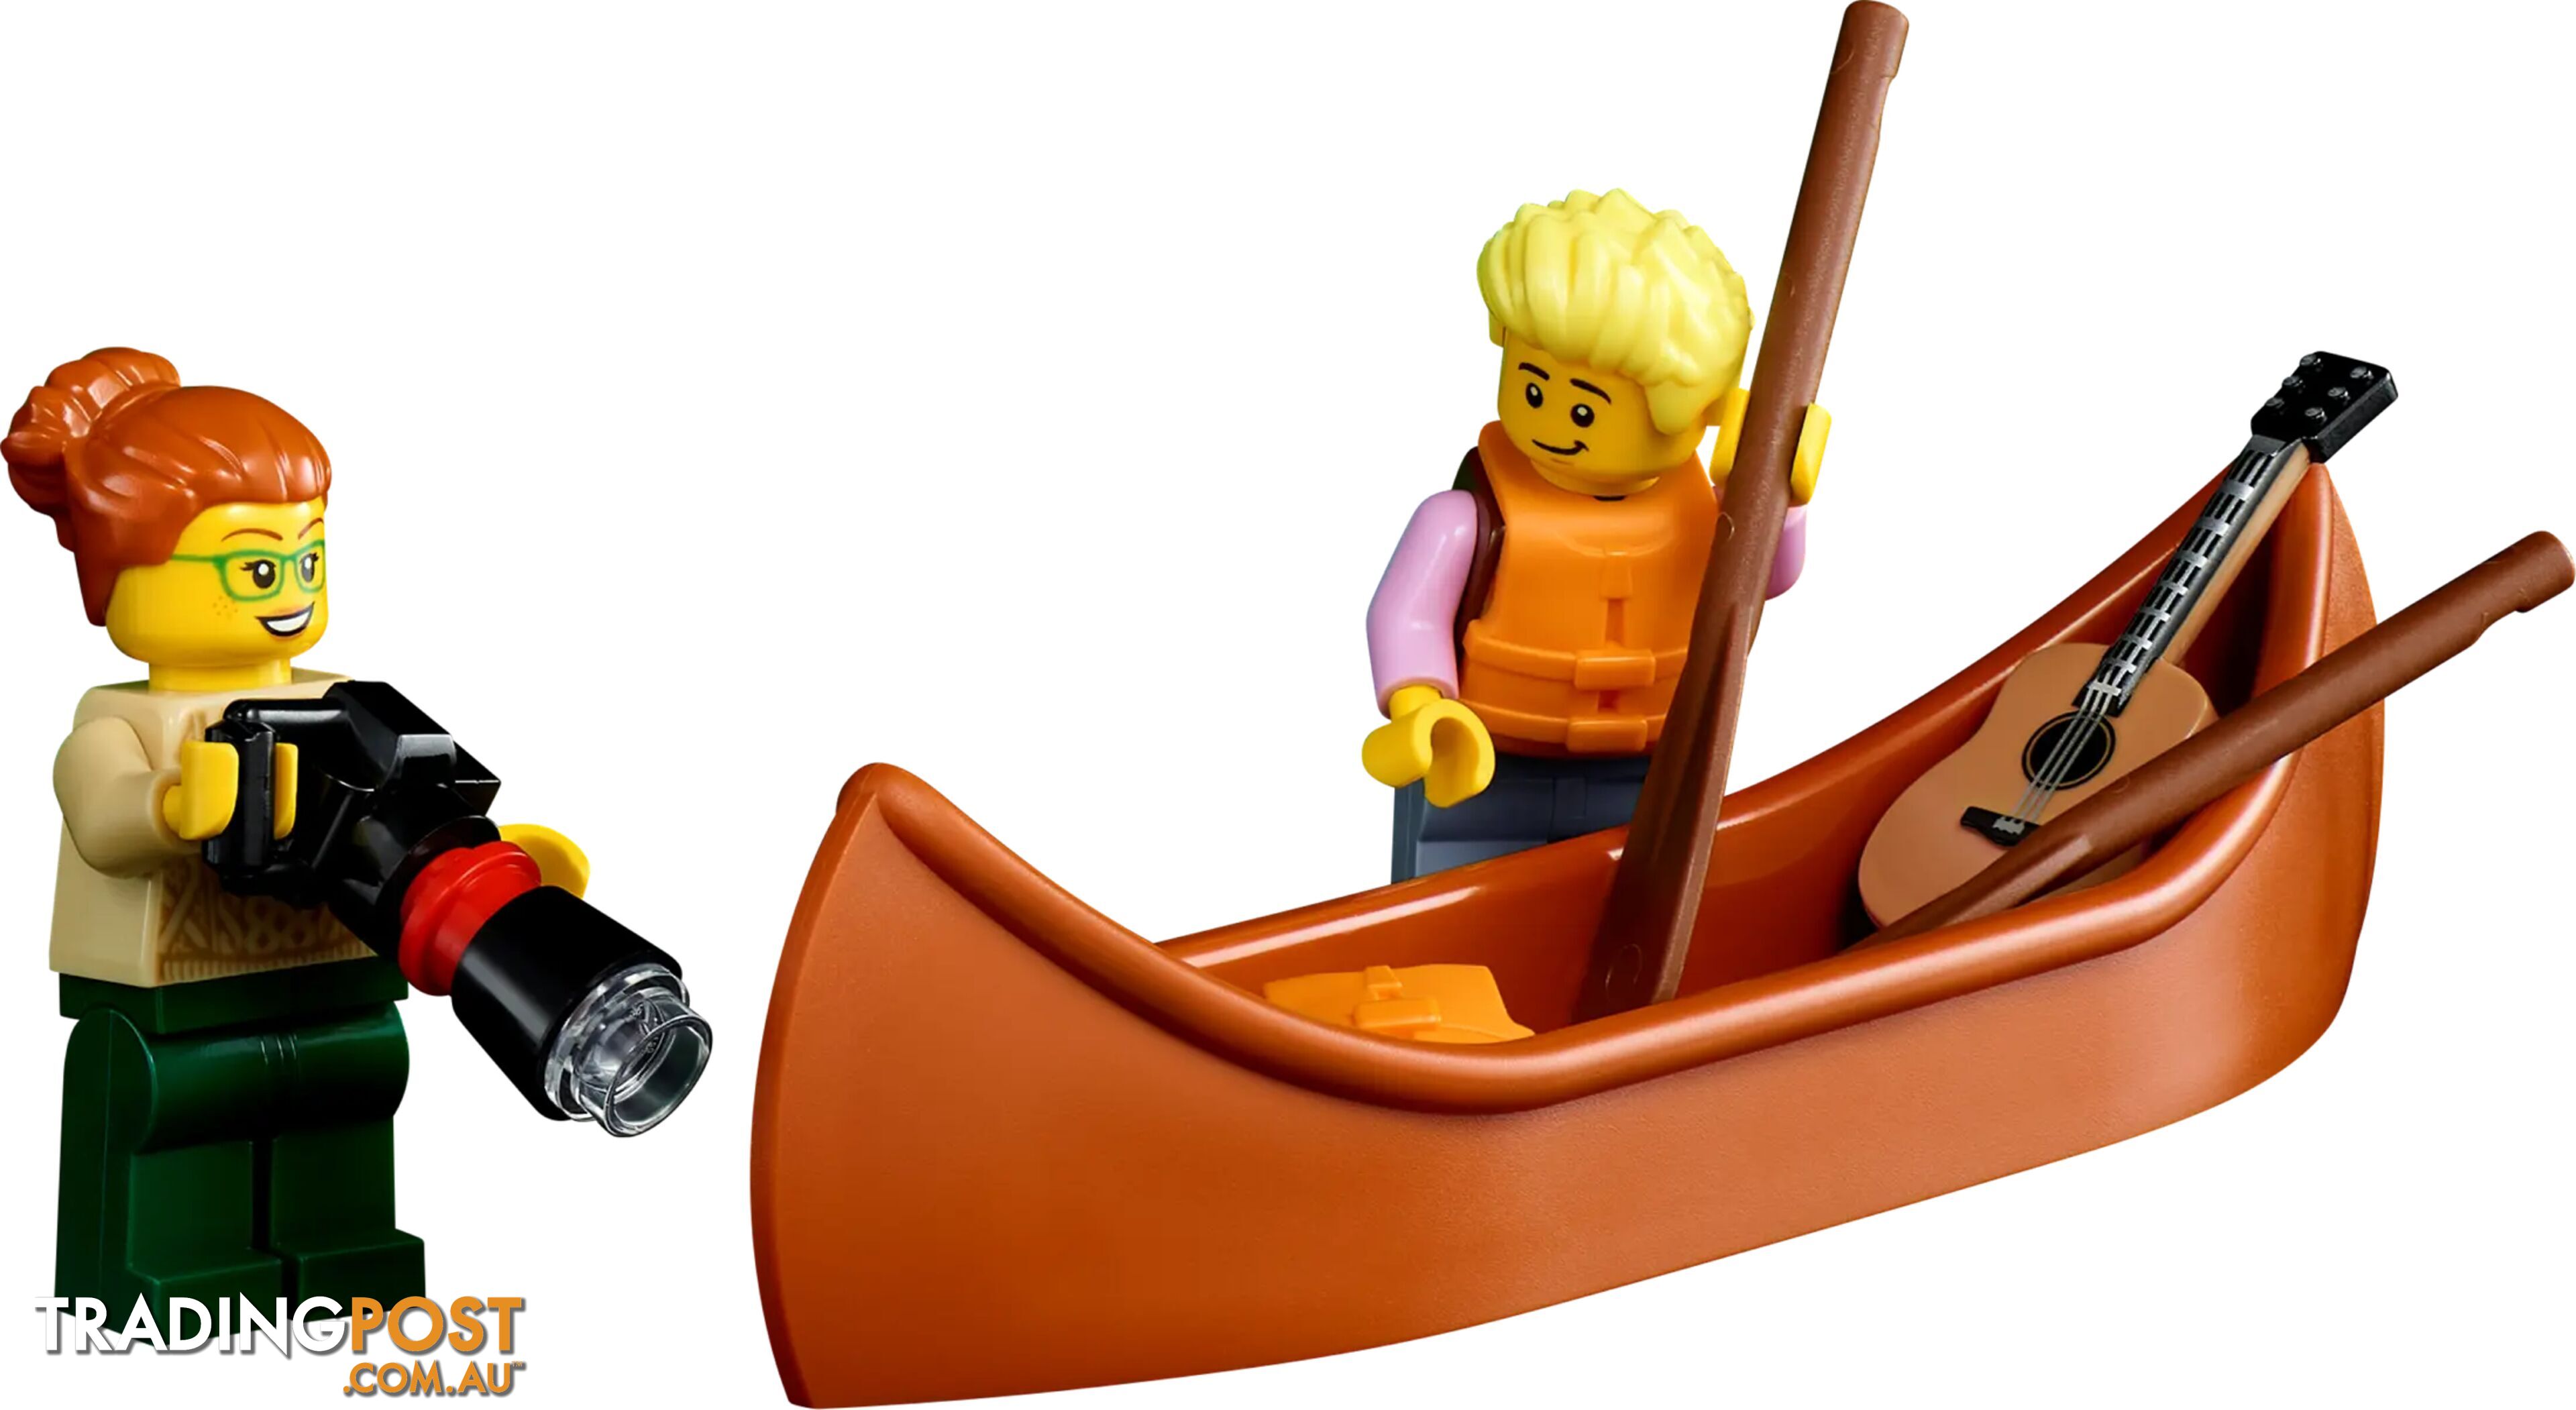 LEGO 21338 A-Frame Cabin - Ideas - 5702017417448